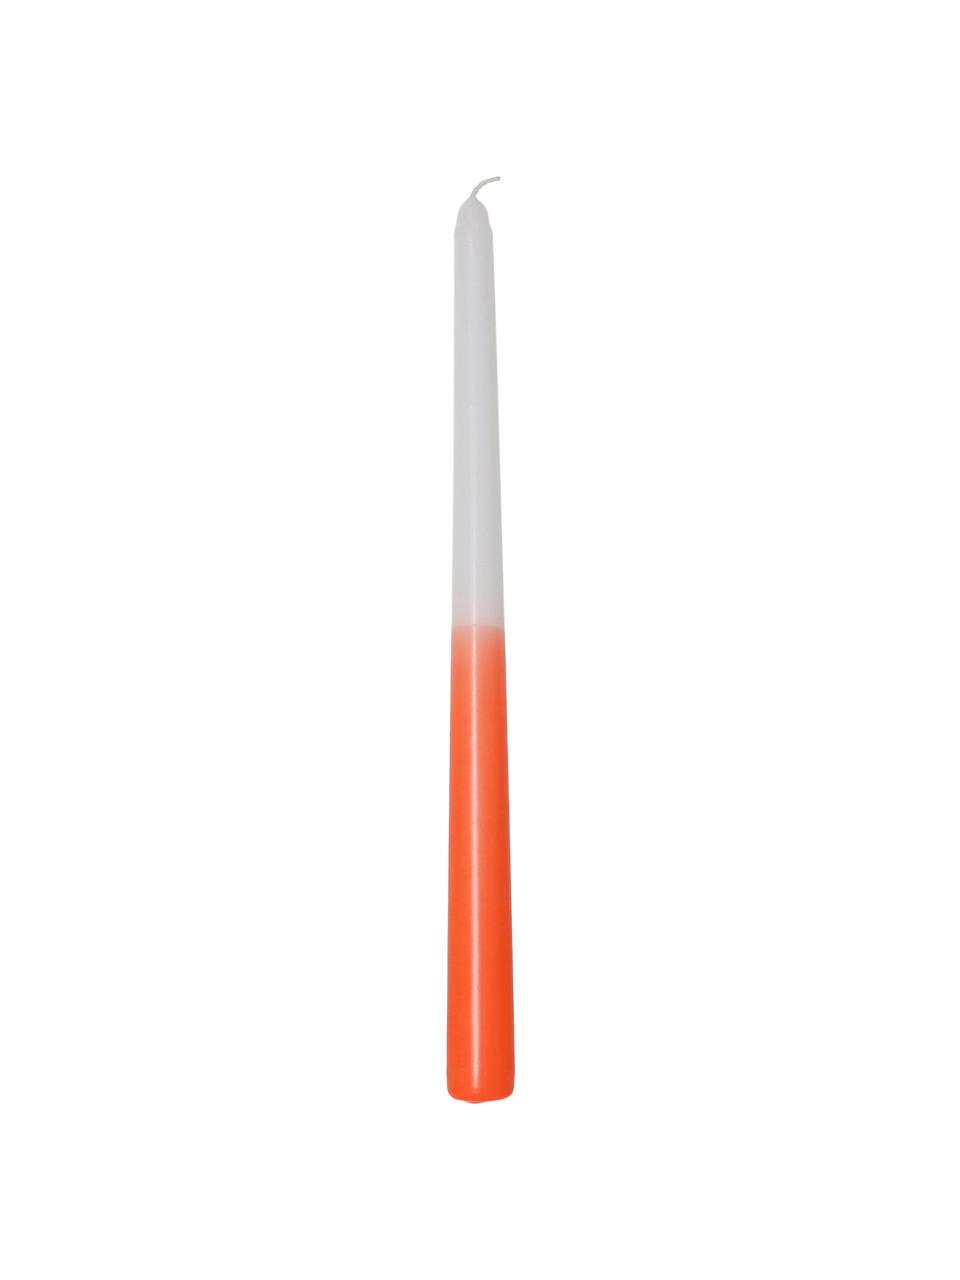 Candela bastone color arancione/bianco Dubli 4 pz, Cera, Arancione, bianco, Ø 2 x Alt. 31 cm